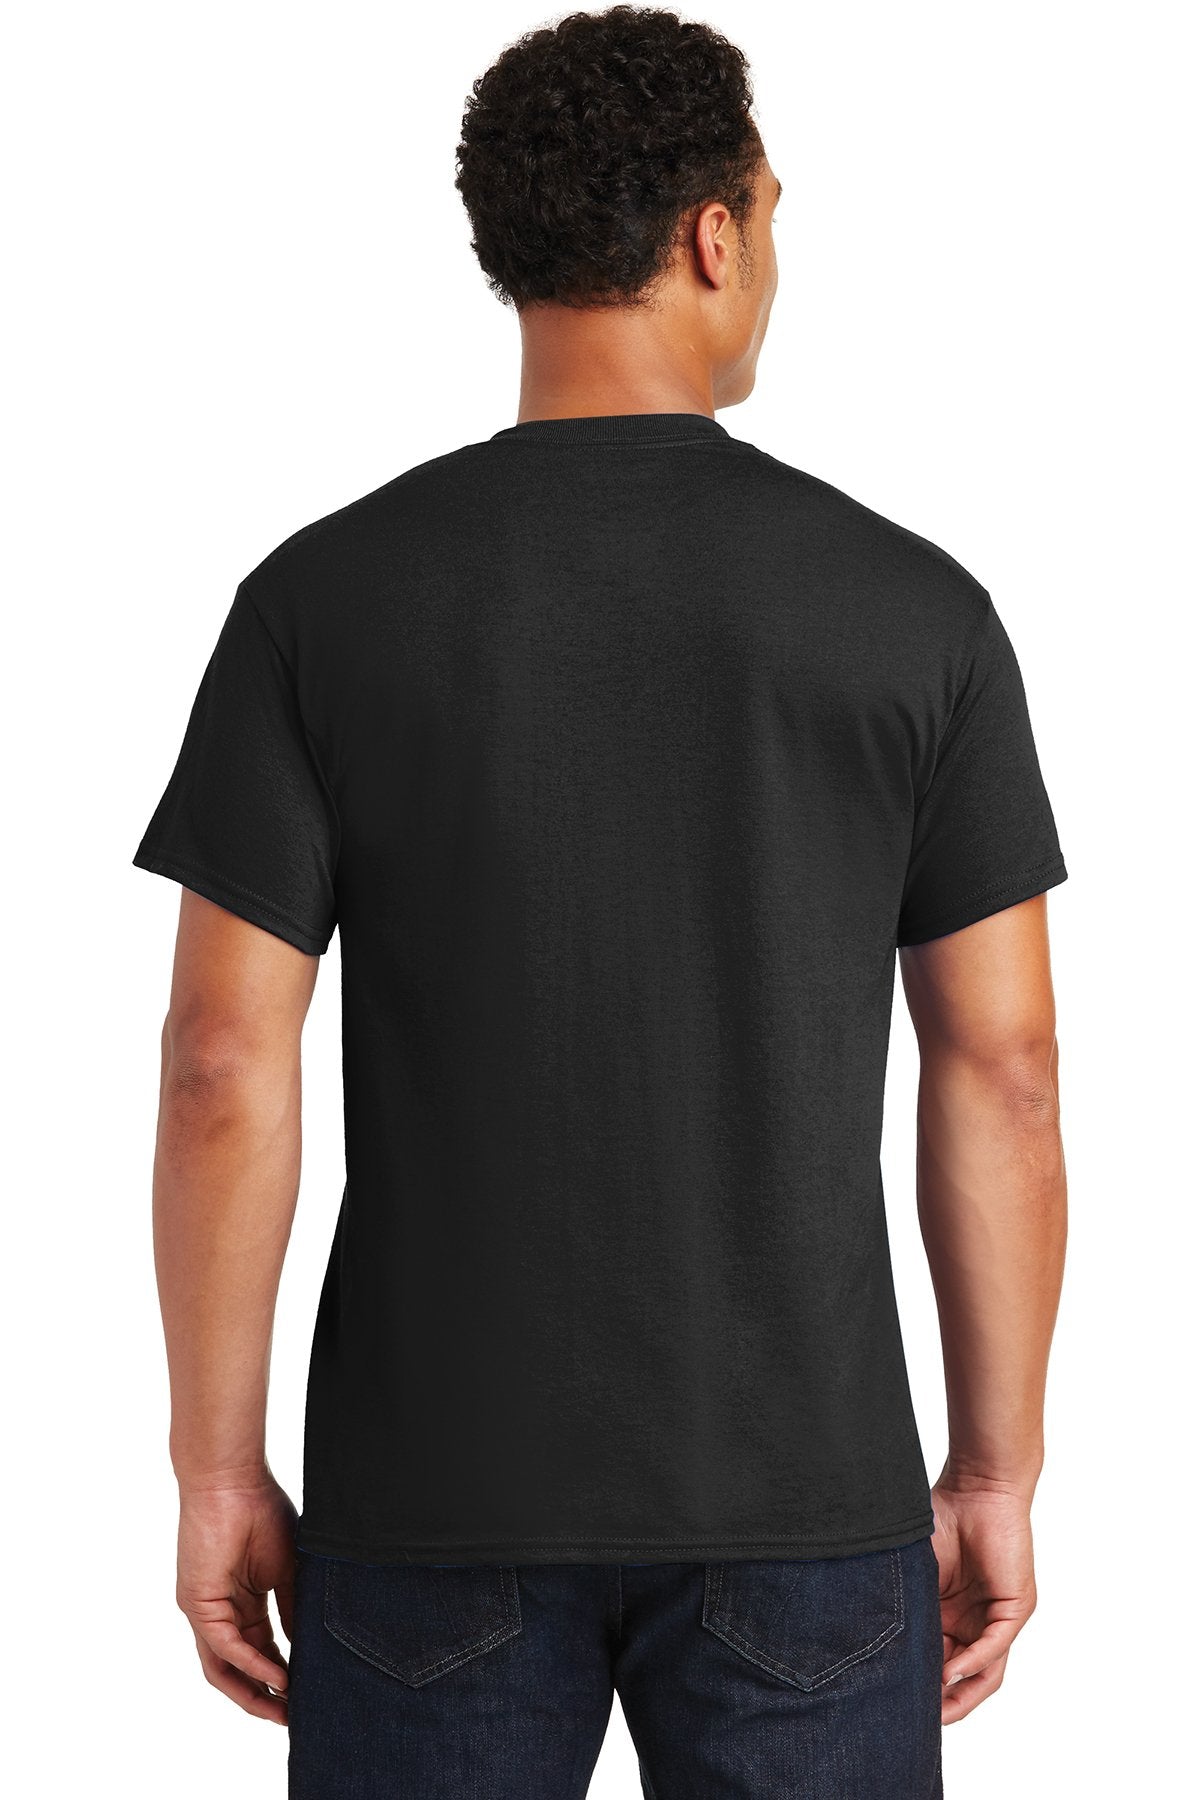 gildan dryblend cotton poly t shirt 8000 black